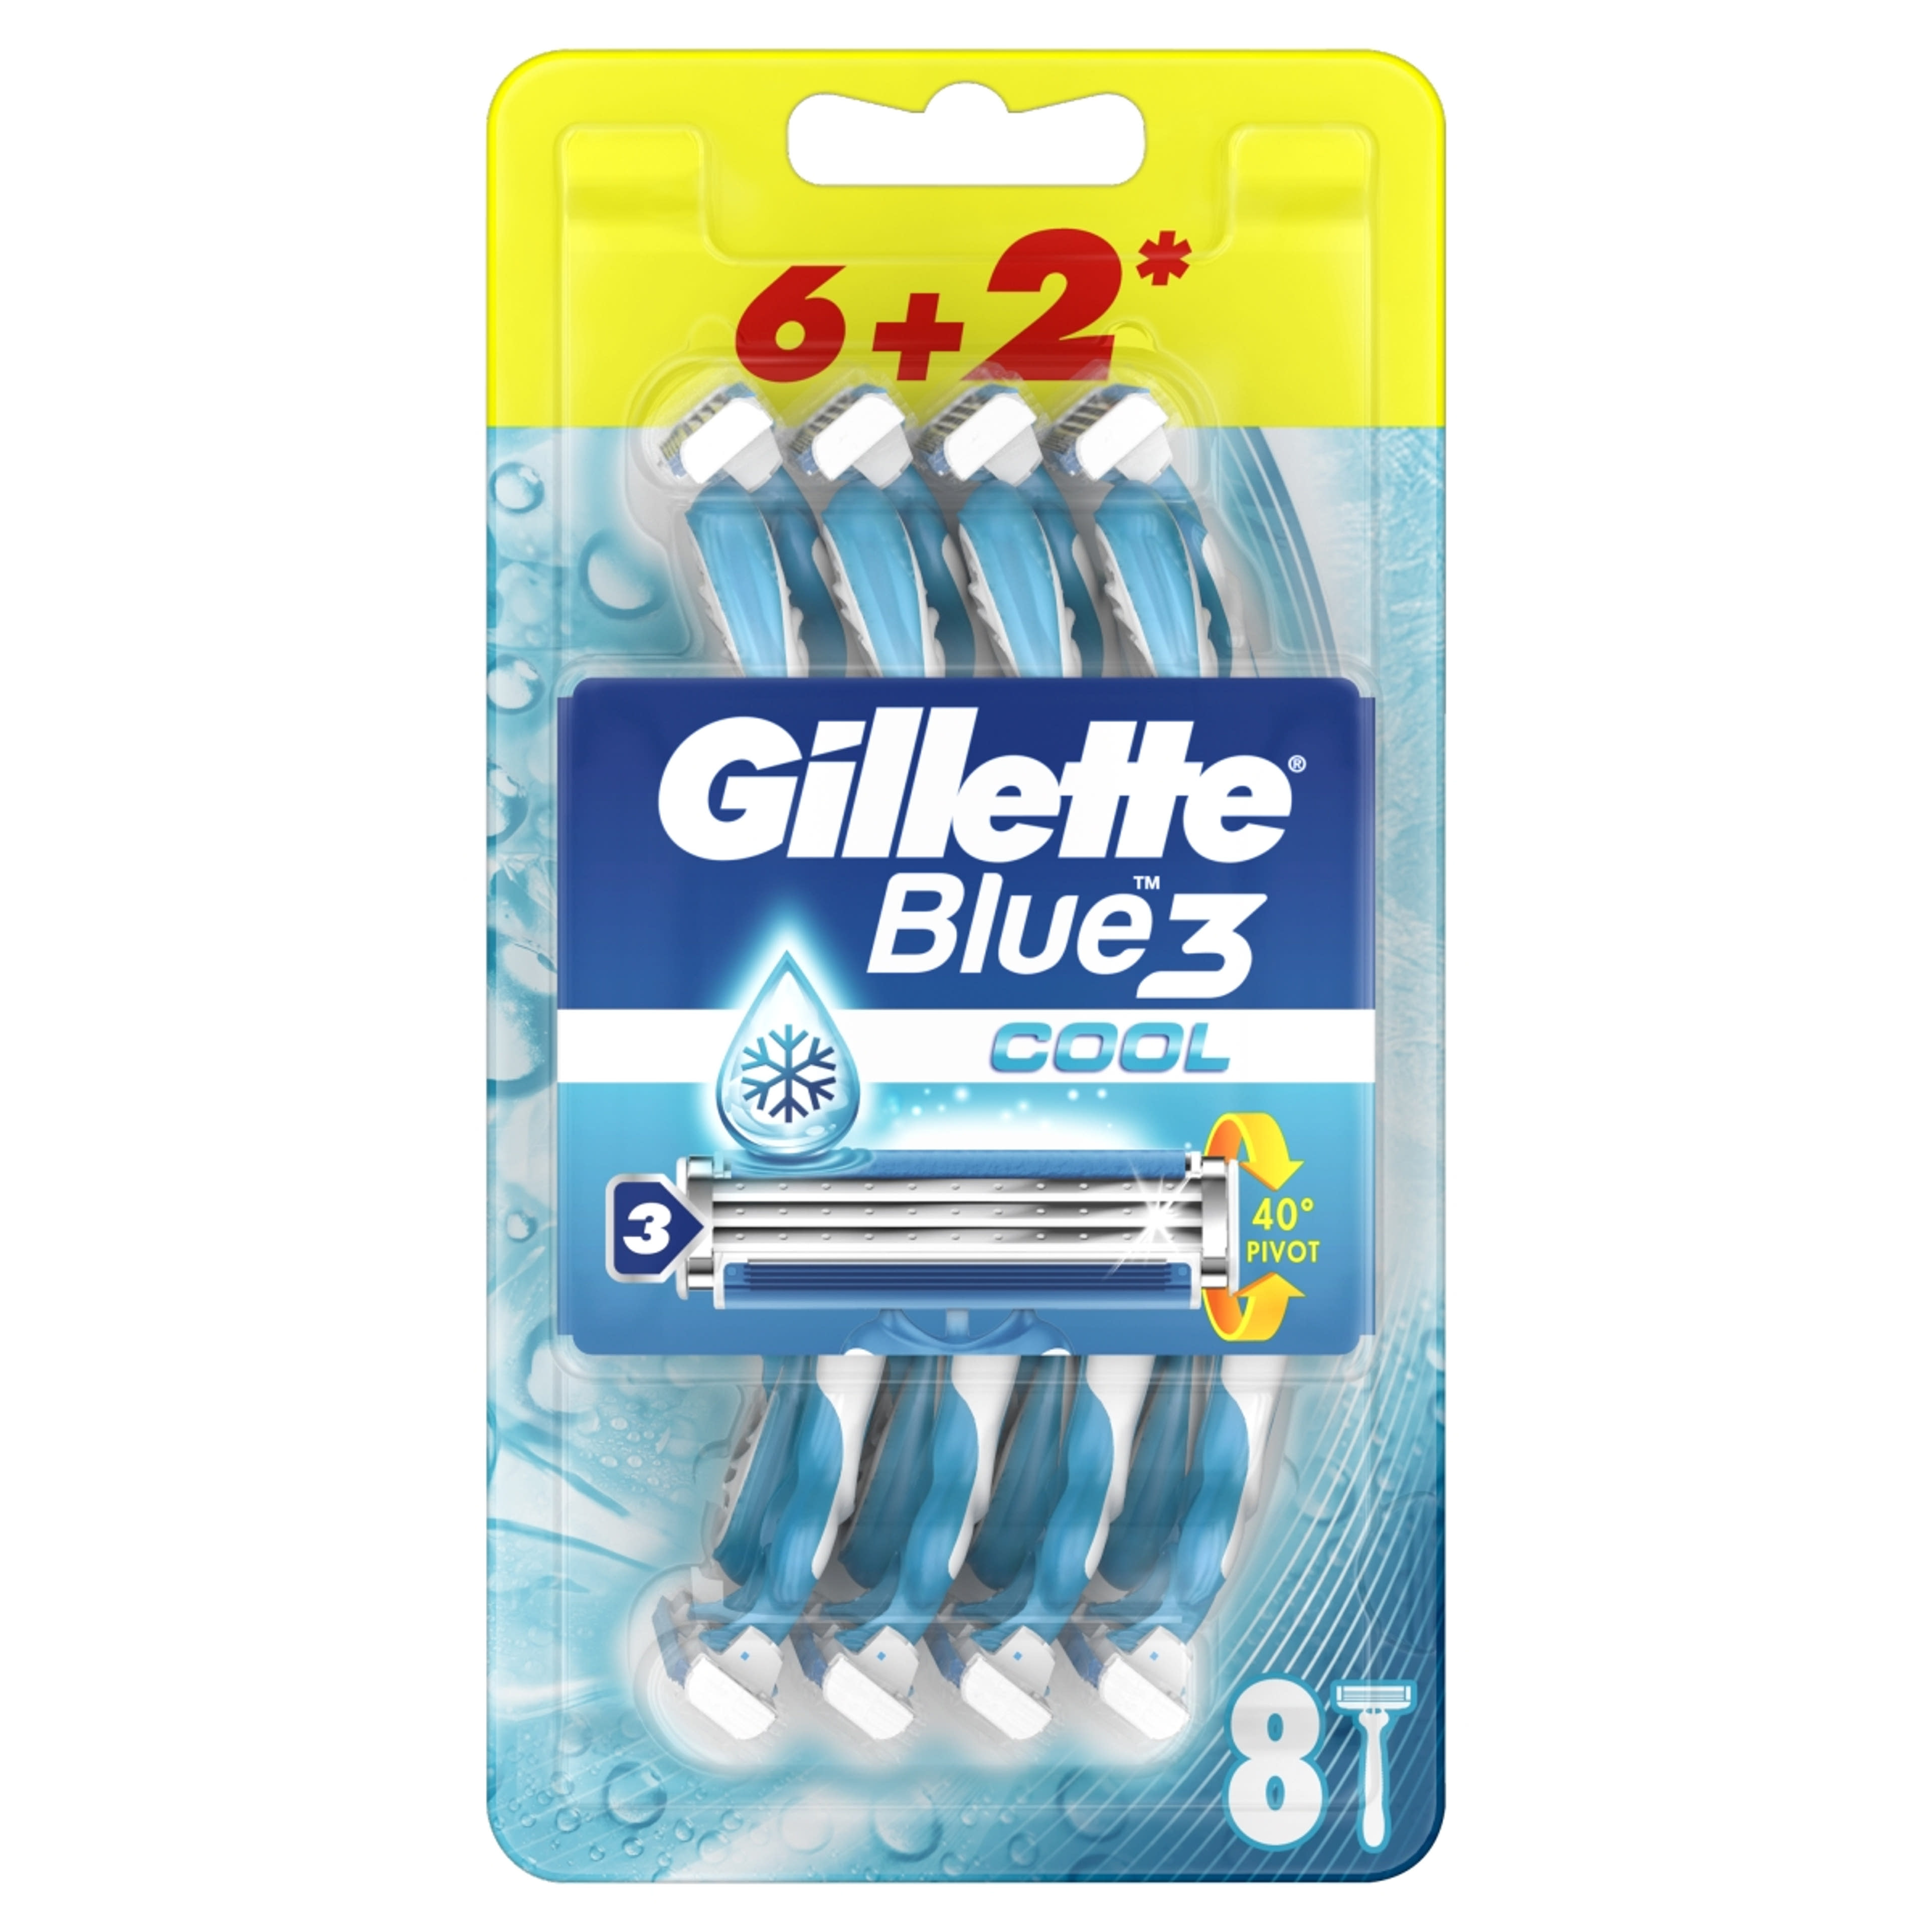 Gillette blue3 cool eldobható borotva 6 + 2 - 8 db